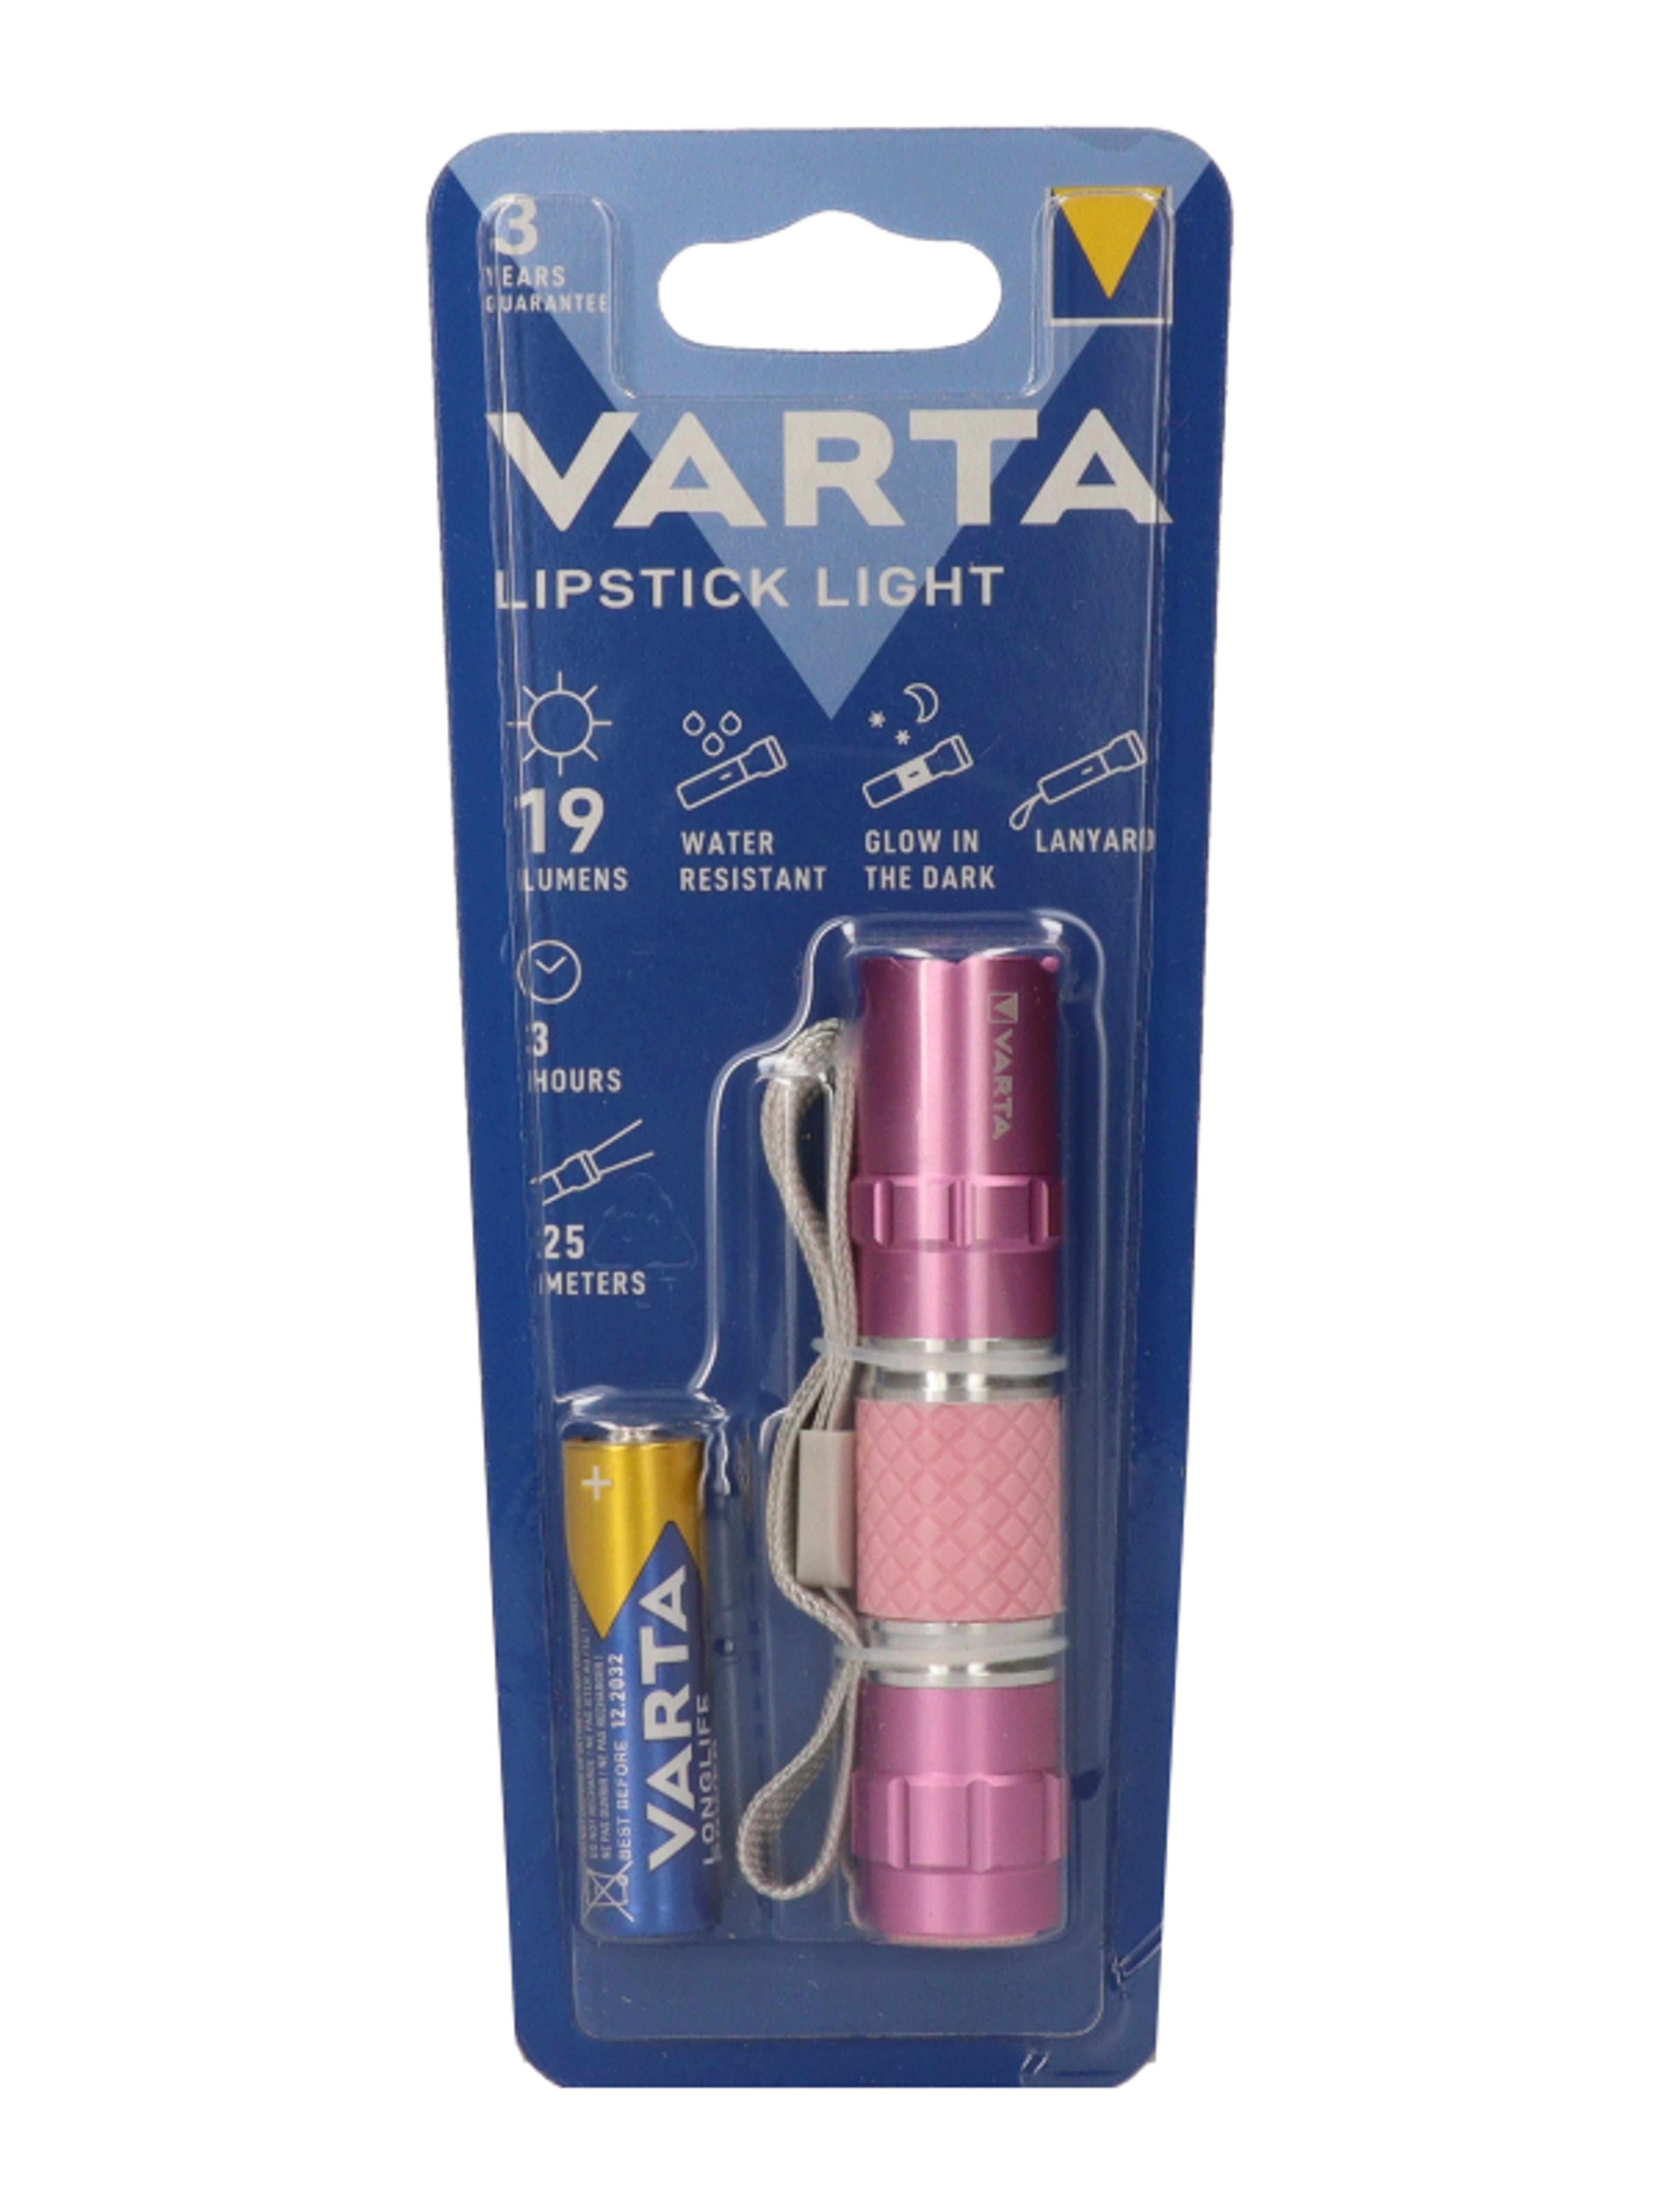 Varta Led Lipstick Light elemlámpa - 1 db